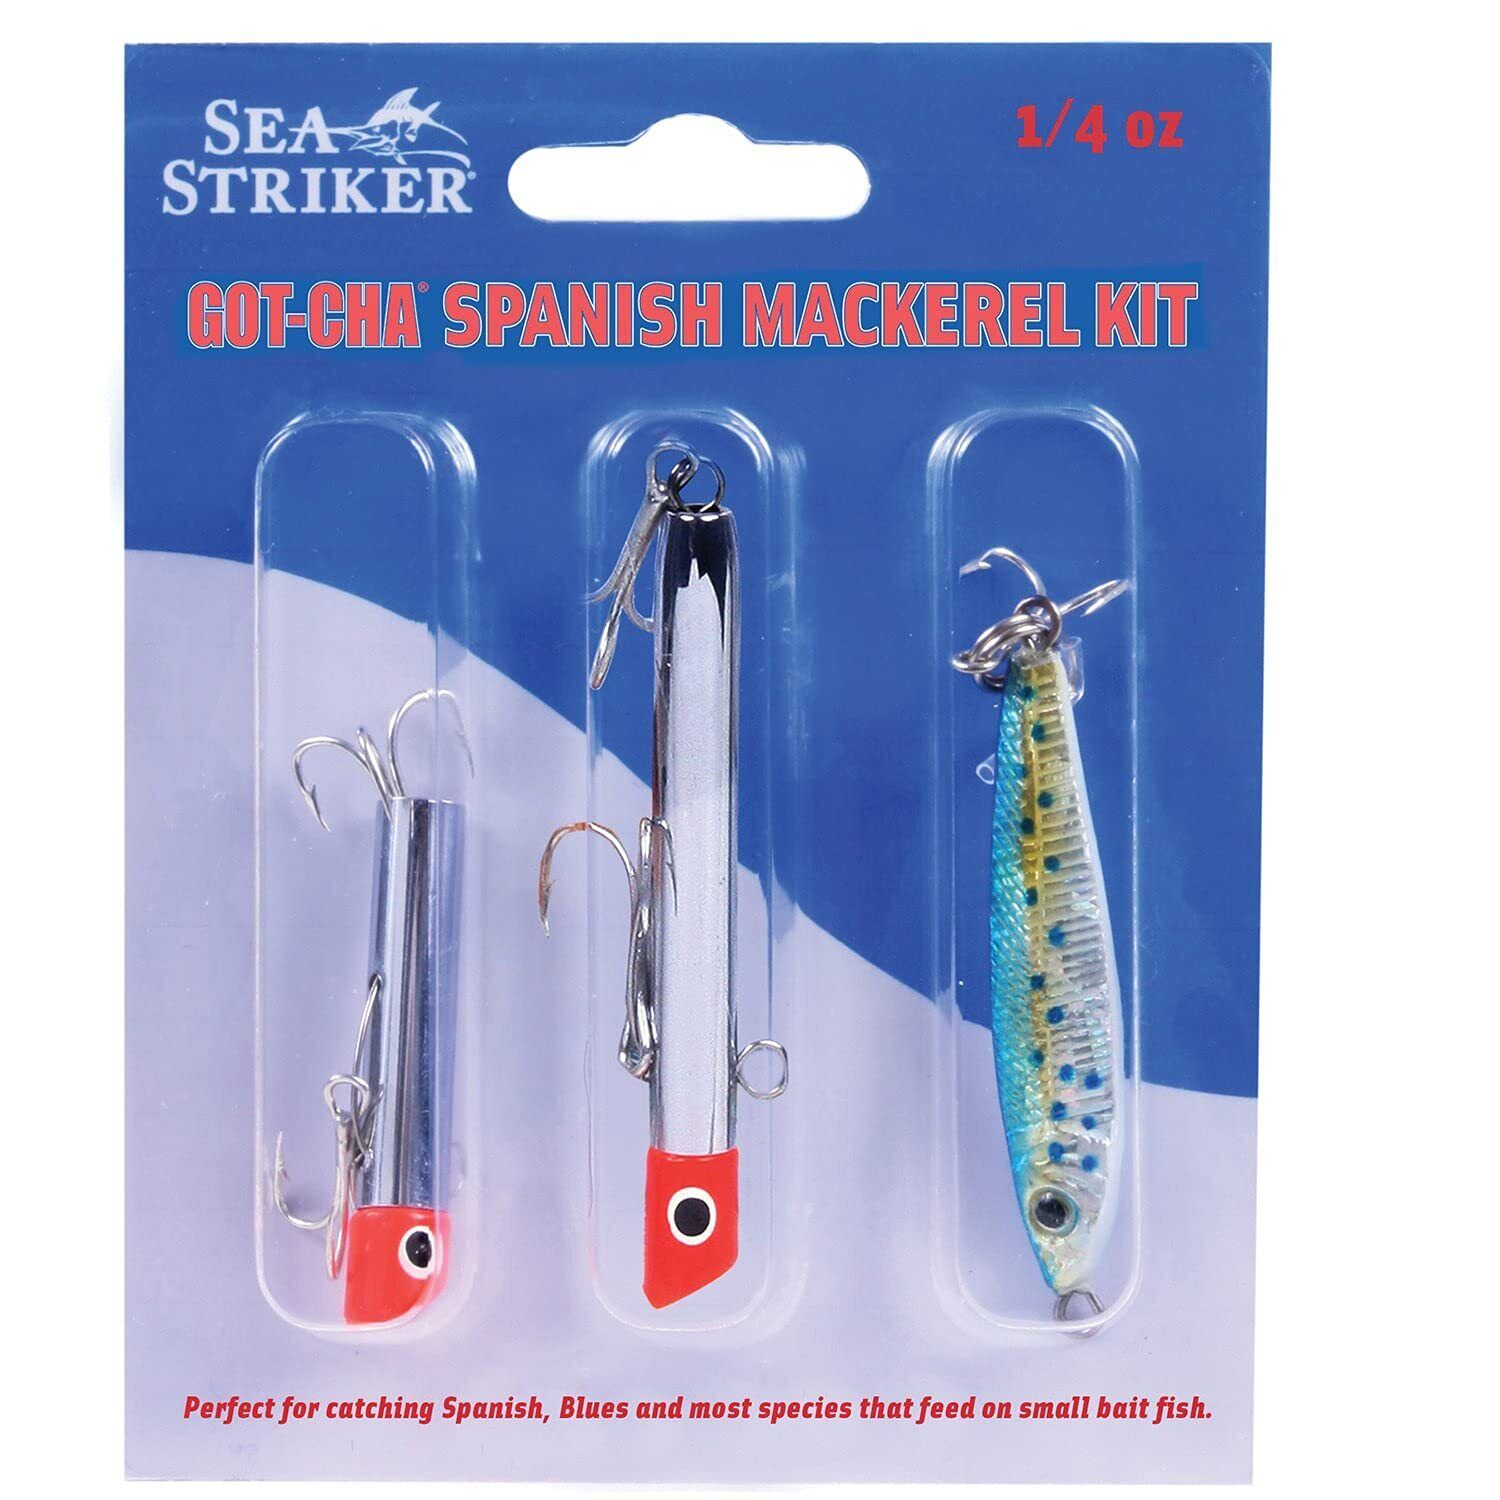 GOT-CHA Spanish Mackerel Kit 3 per Pack, Includes G1601